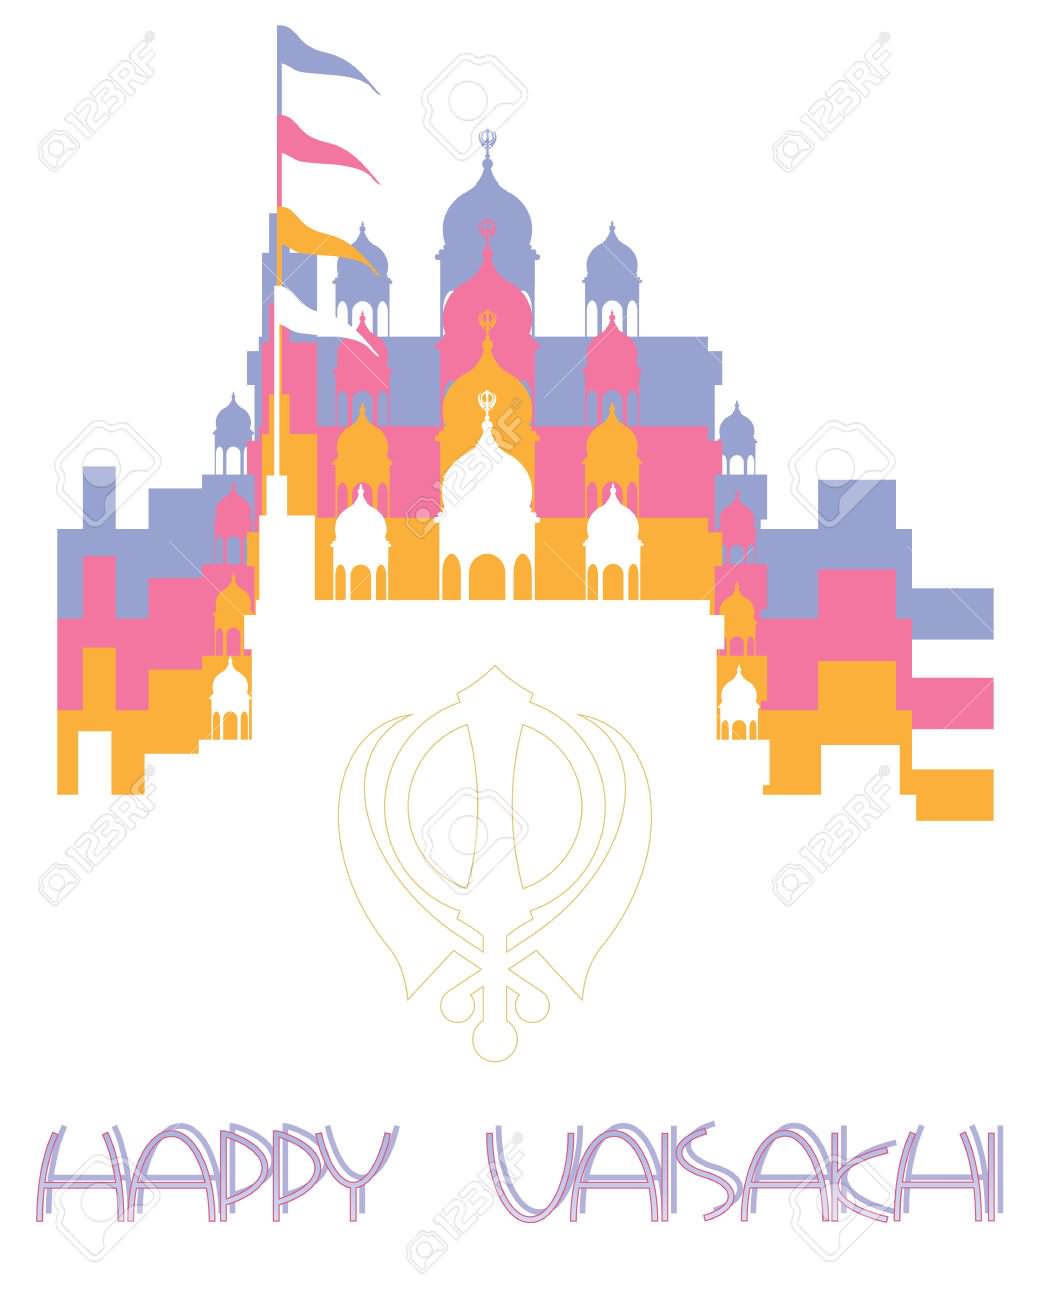 Happy Vaisakhi Greeting Card